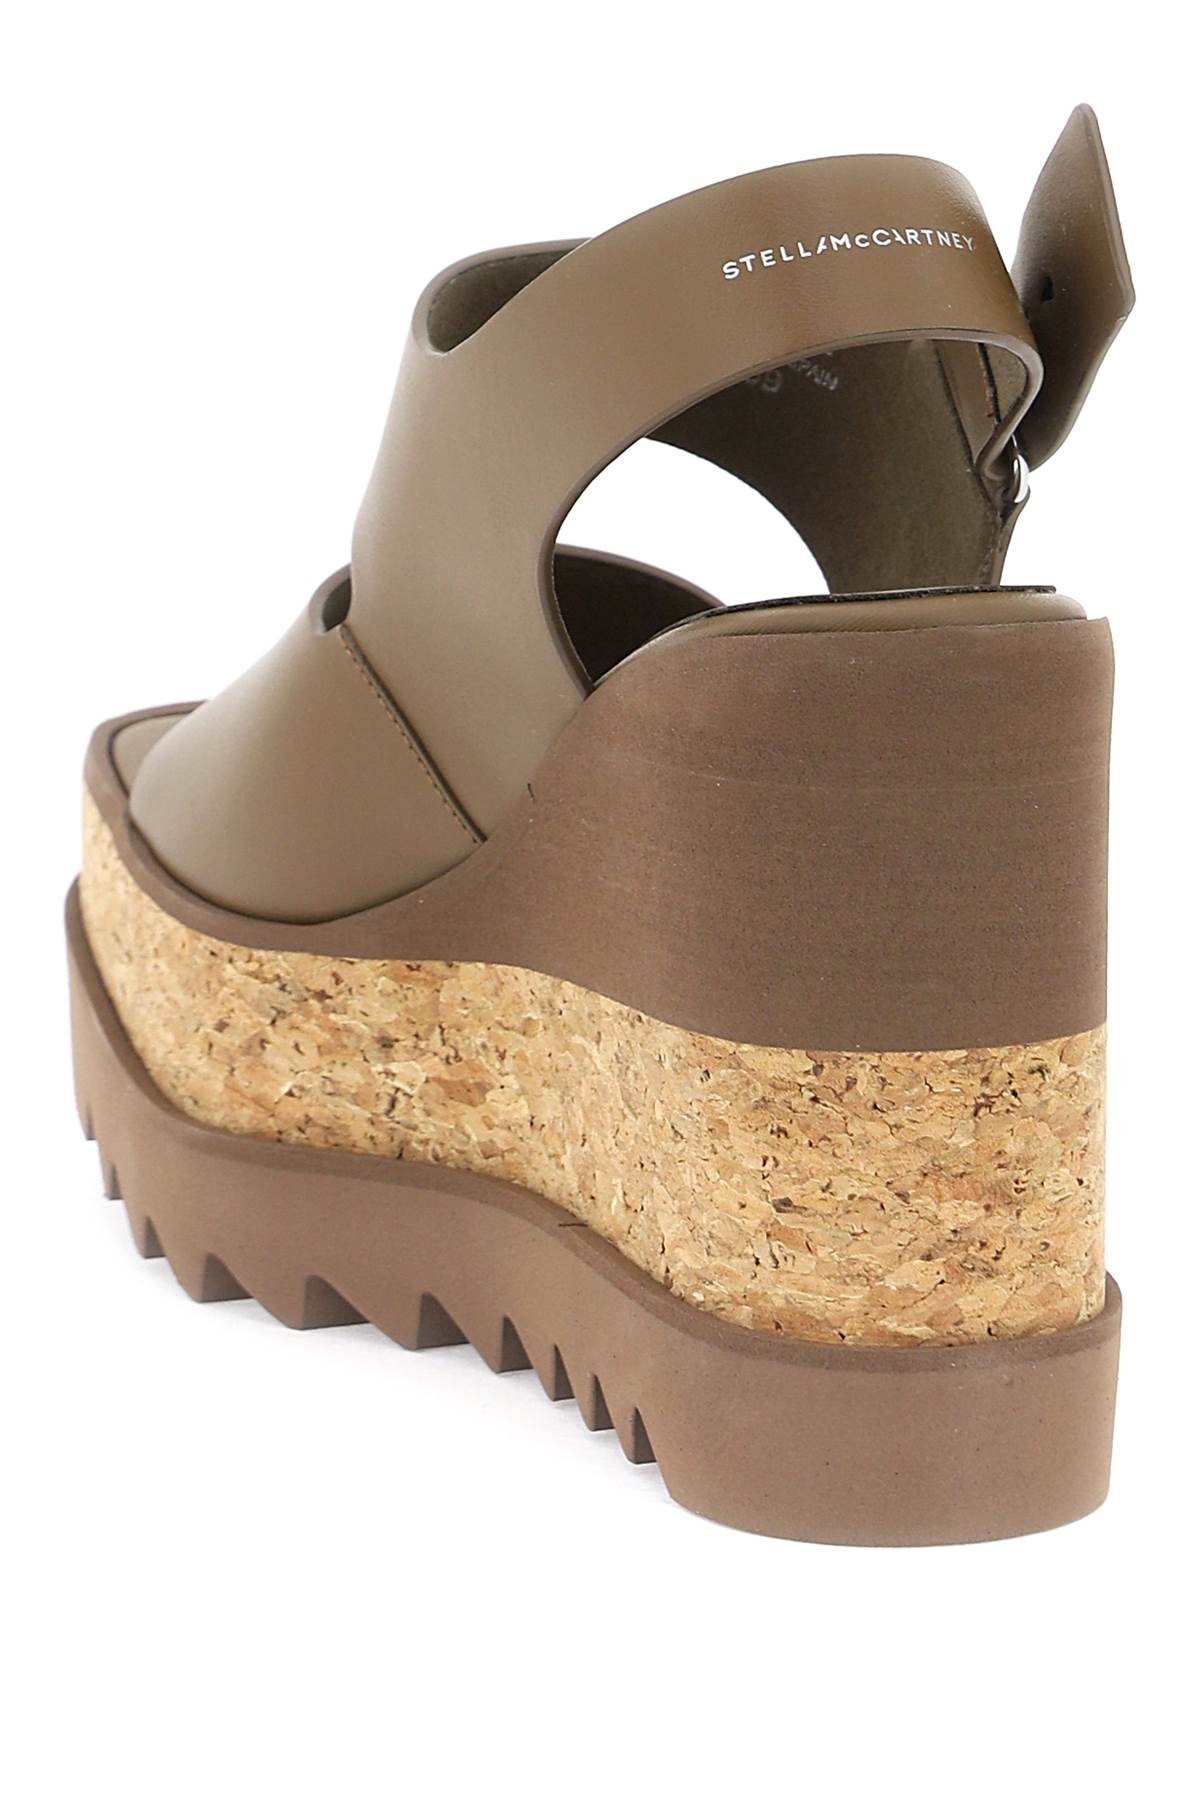 Stella mccartney elyse platform sandals with wedge-2